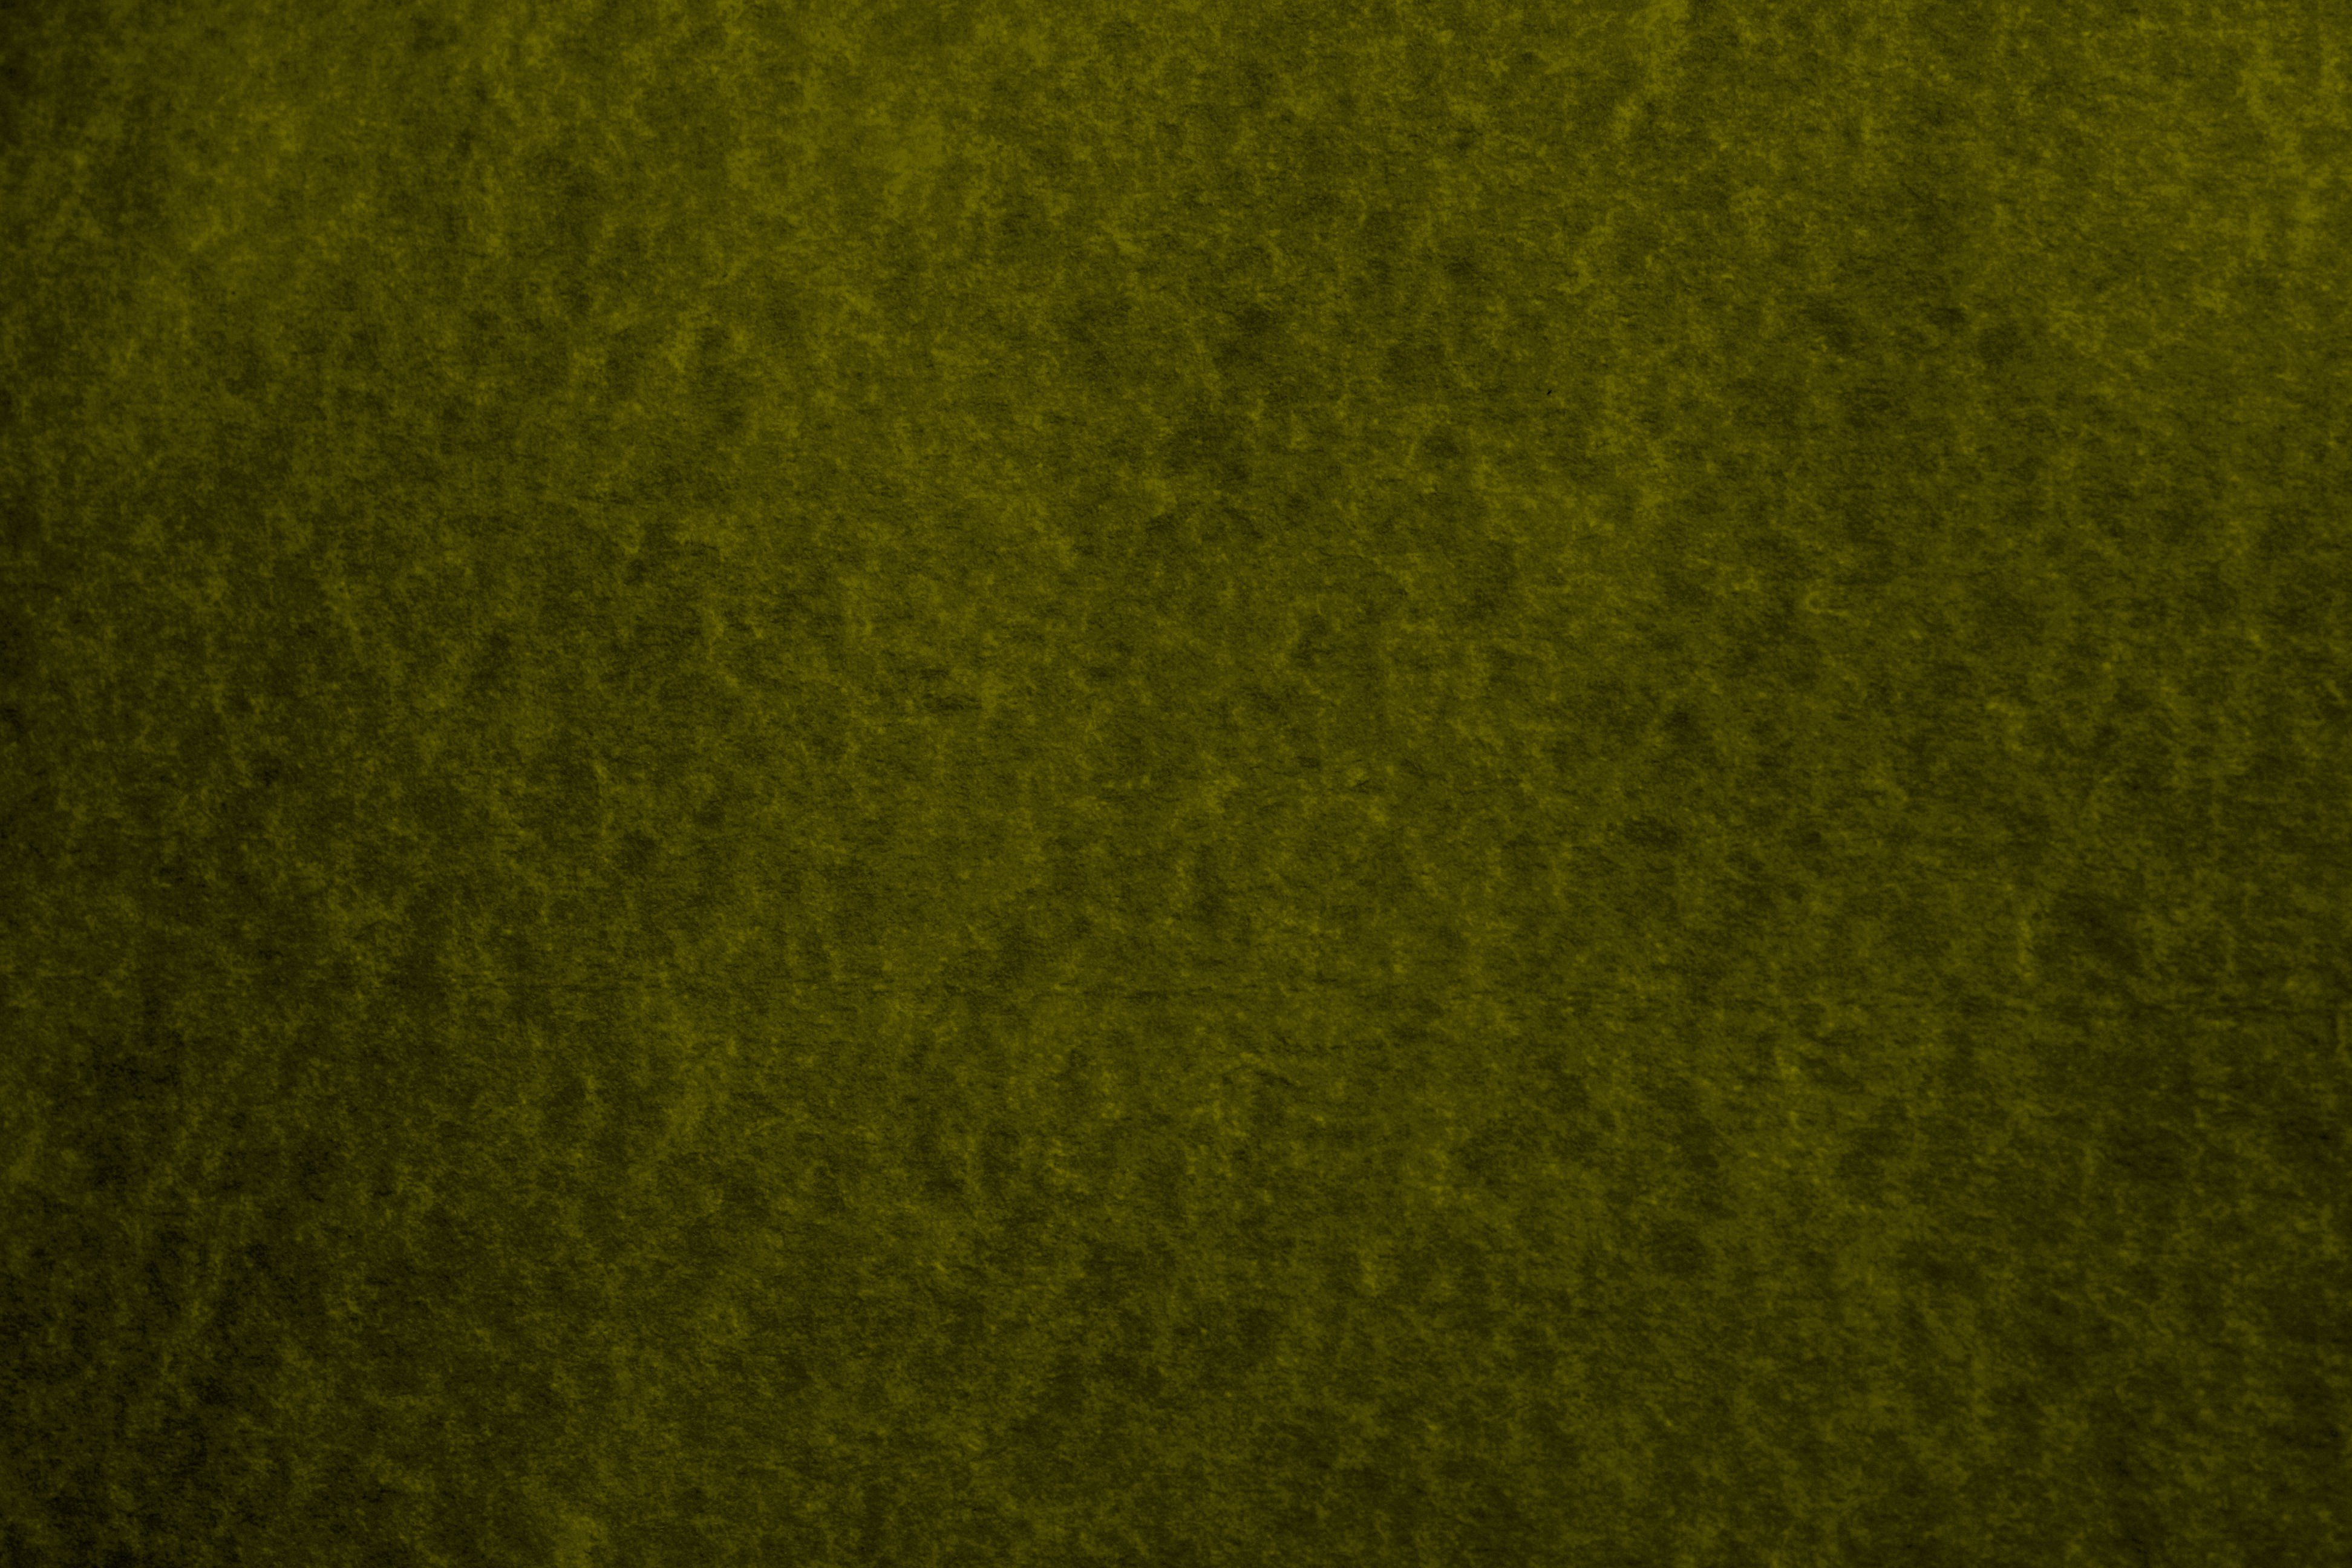 Olive Green color sample love it | Mik3 | Pinterest | Green ...